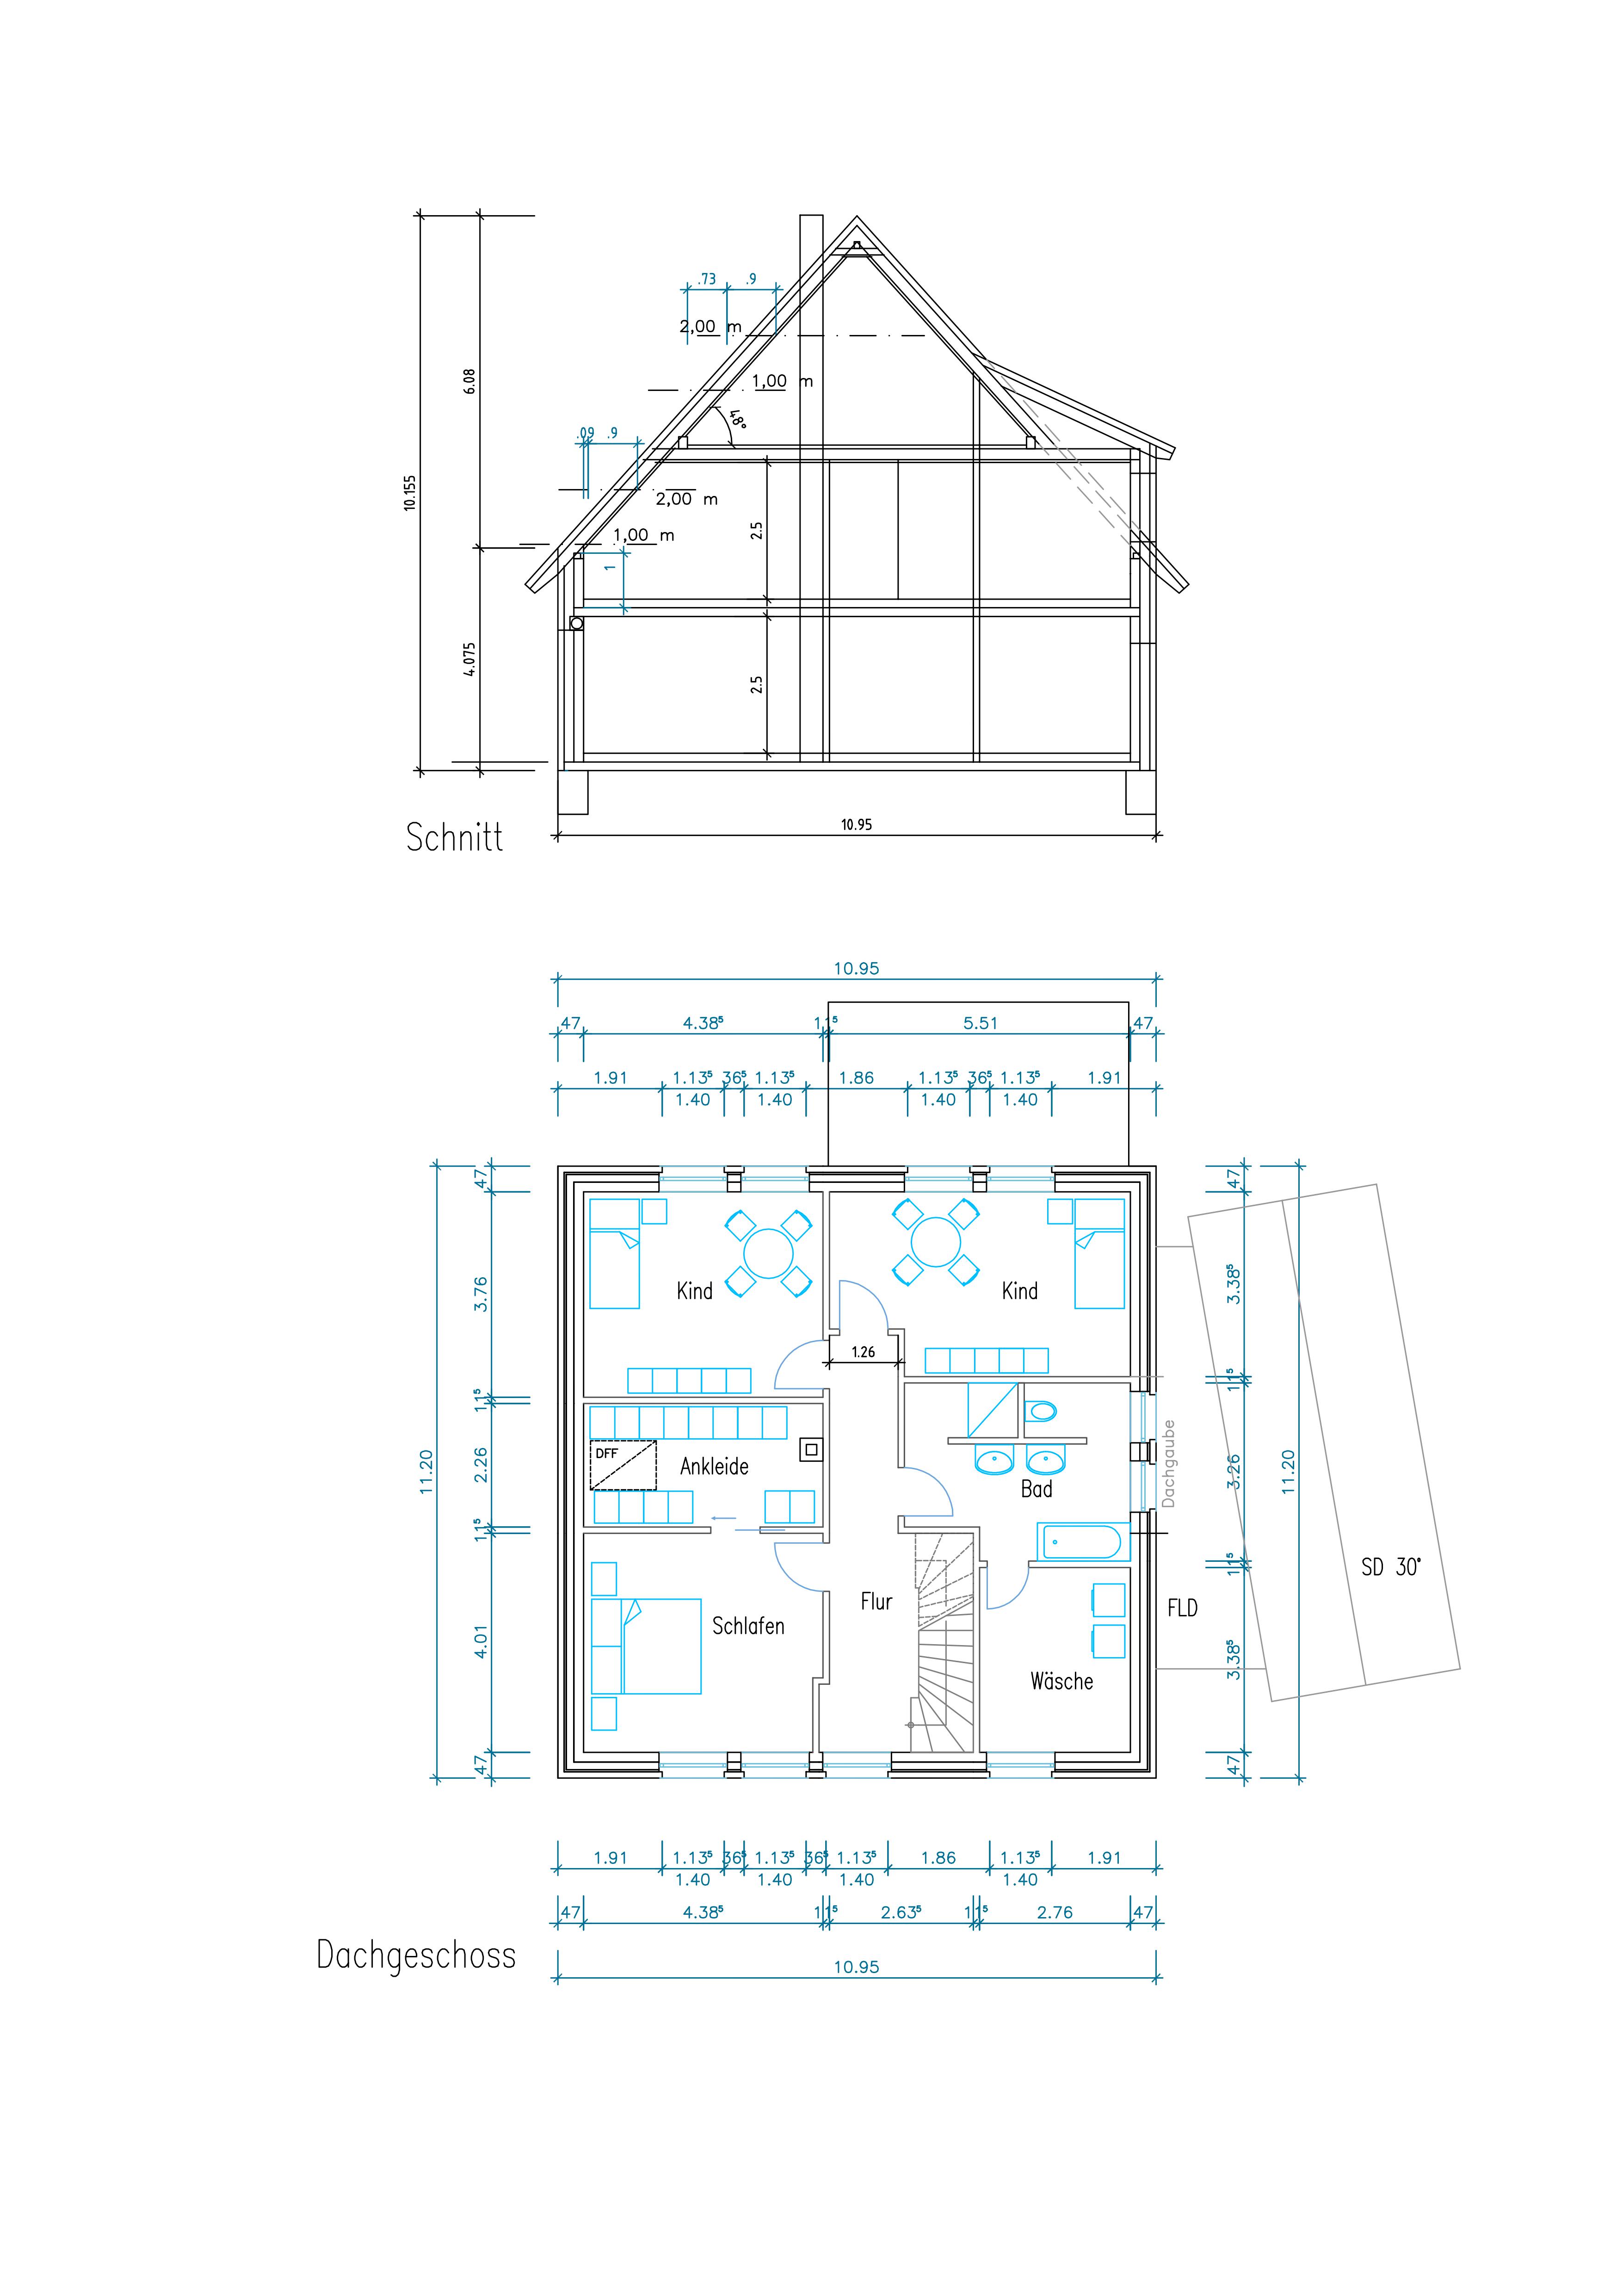 planung-eines-einfamilienhauses-danke-fuer-euer-feedback-160273-2.jpg